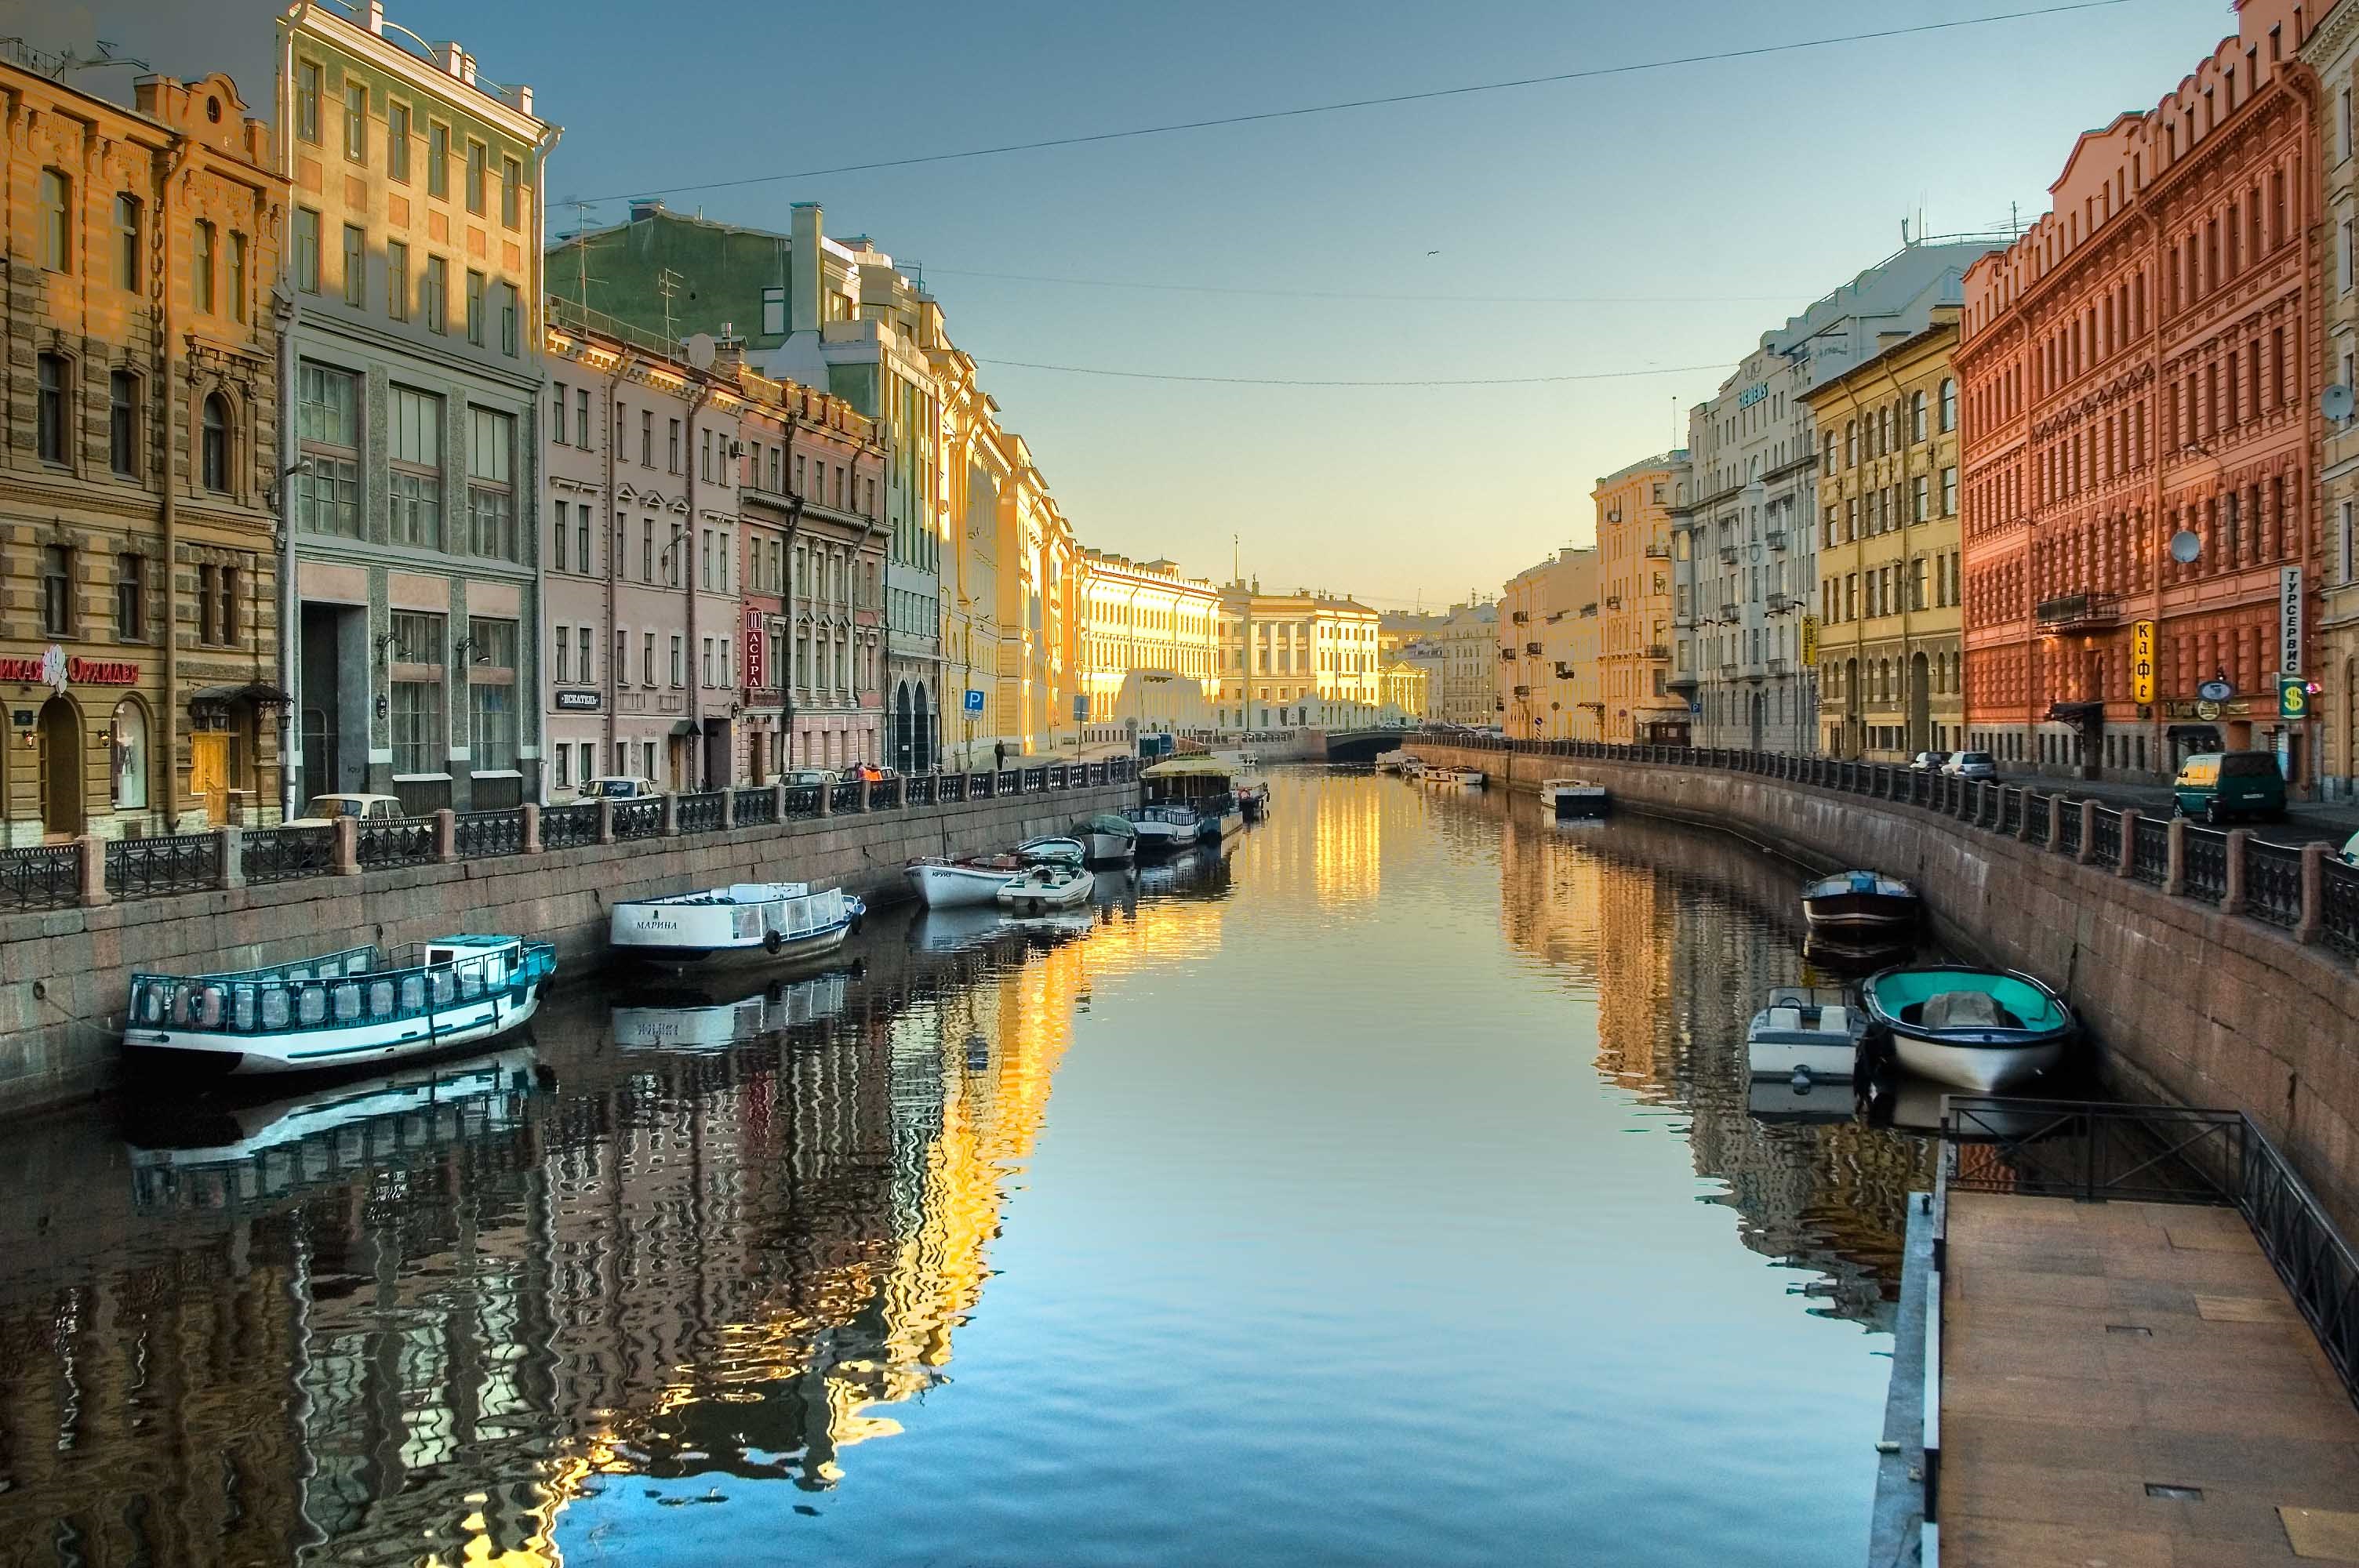 Saint Petersburg, Venice of the North